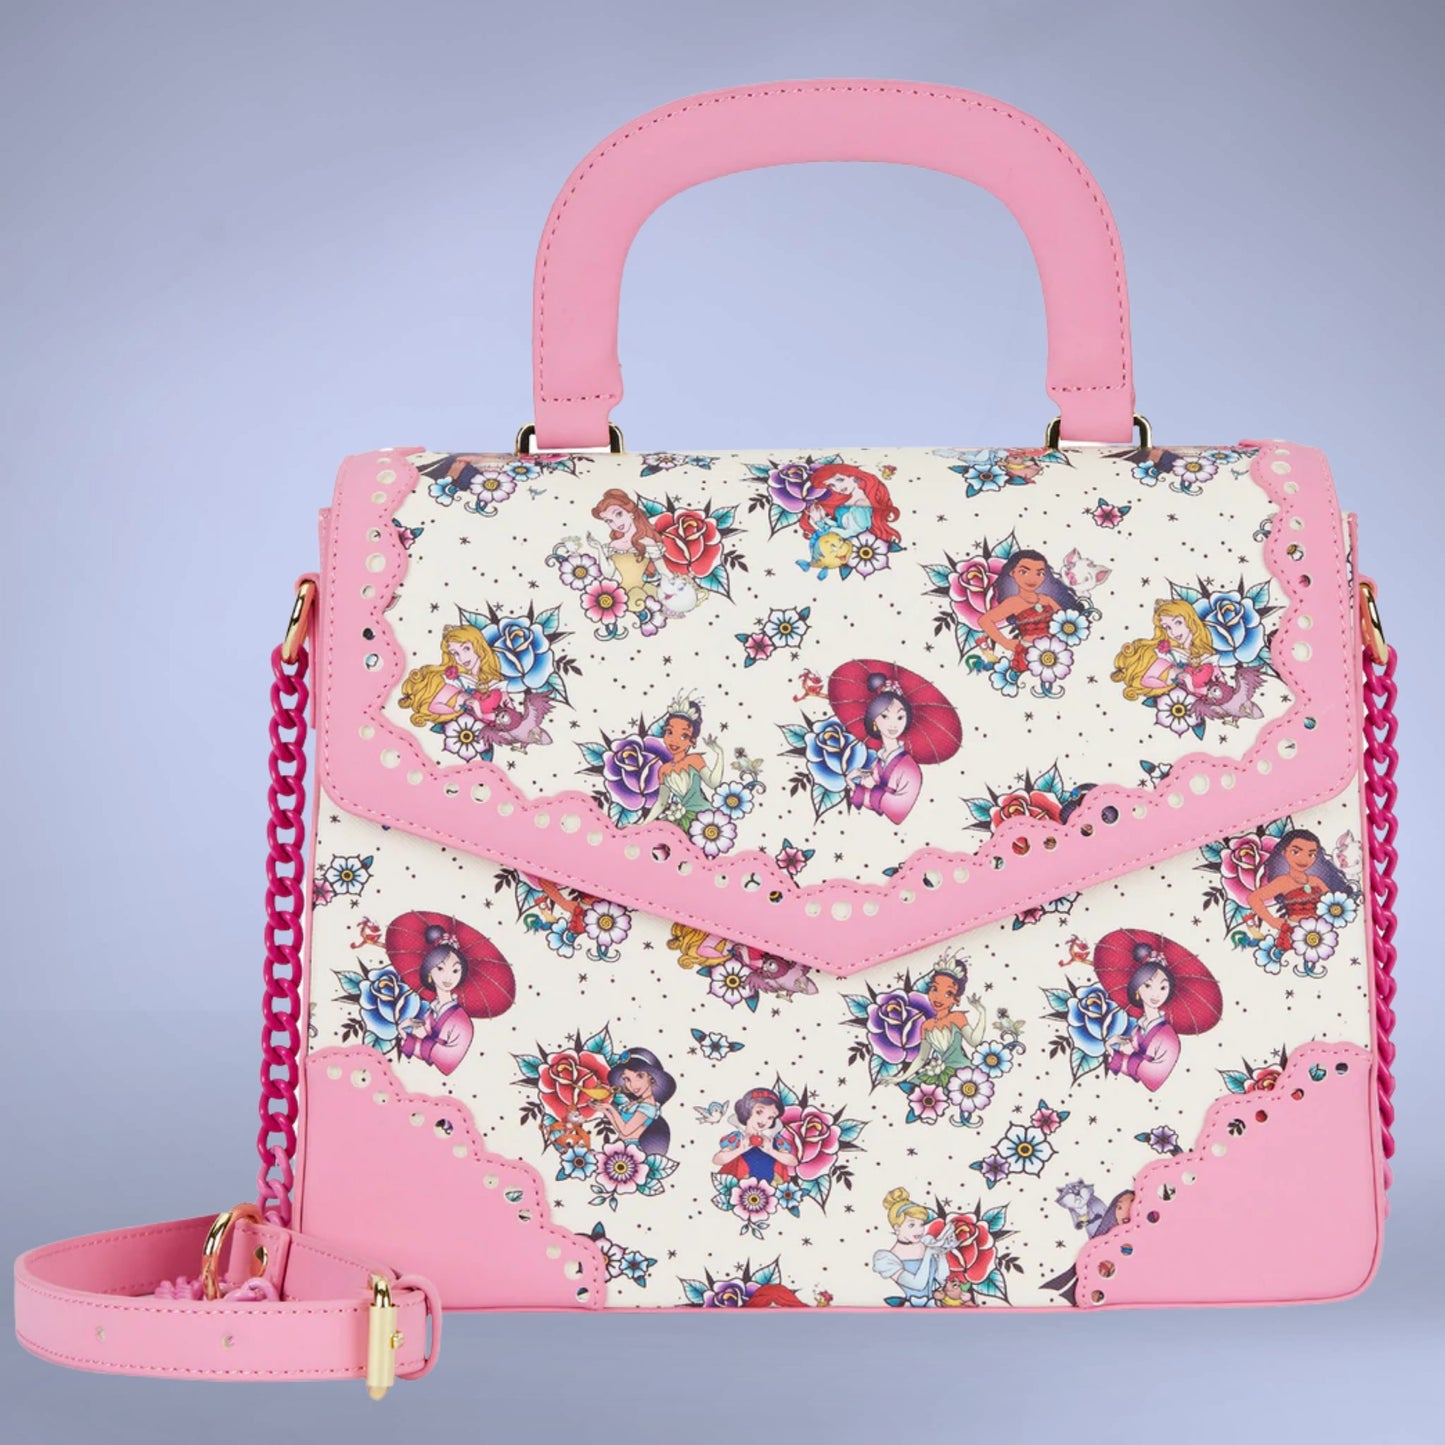 Disney Princess Floral Tattoo Pattern Crossbody Bag by Loungefly